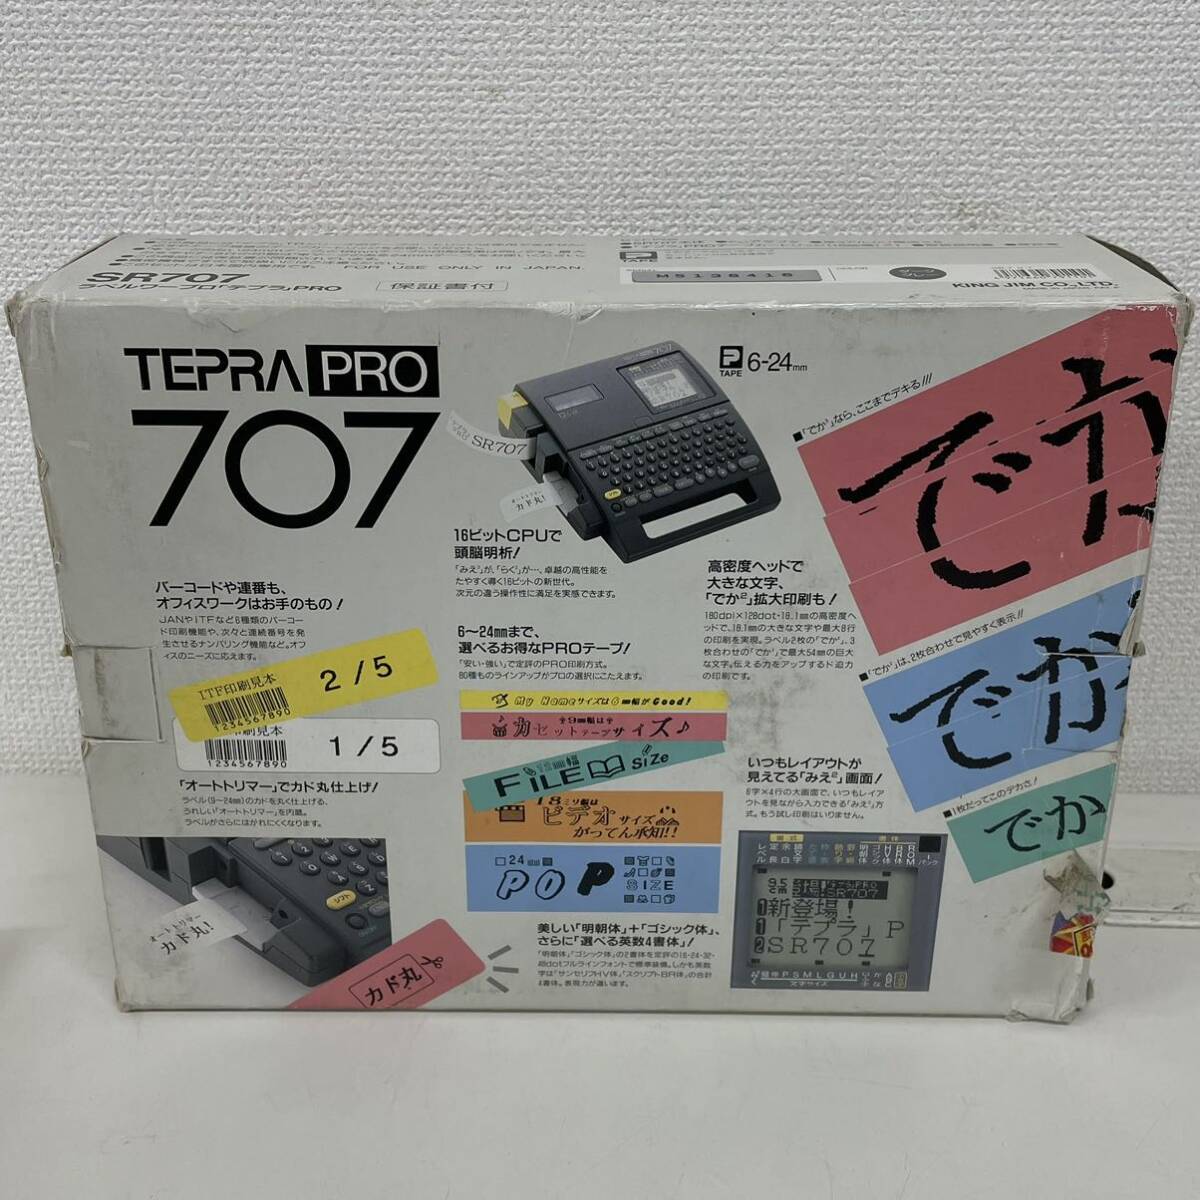 TEPRA PRO Tepra Pro SR707 KING JIM King Jim этикетка текстовой процессор Tepra текущее состояние товар 